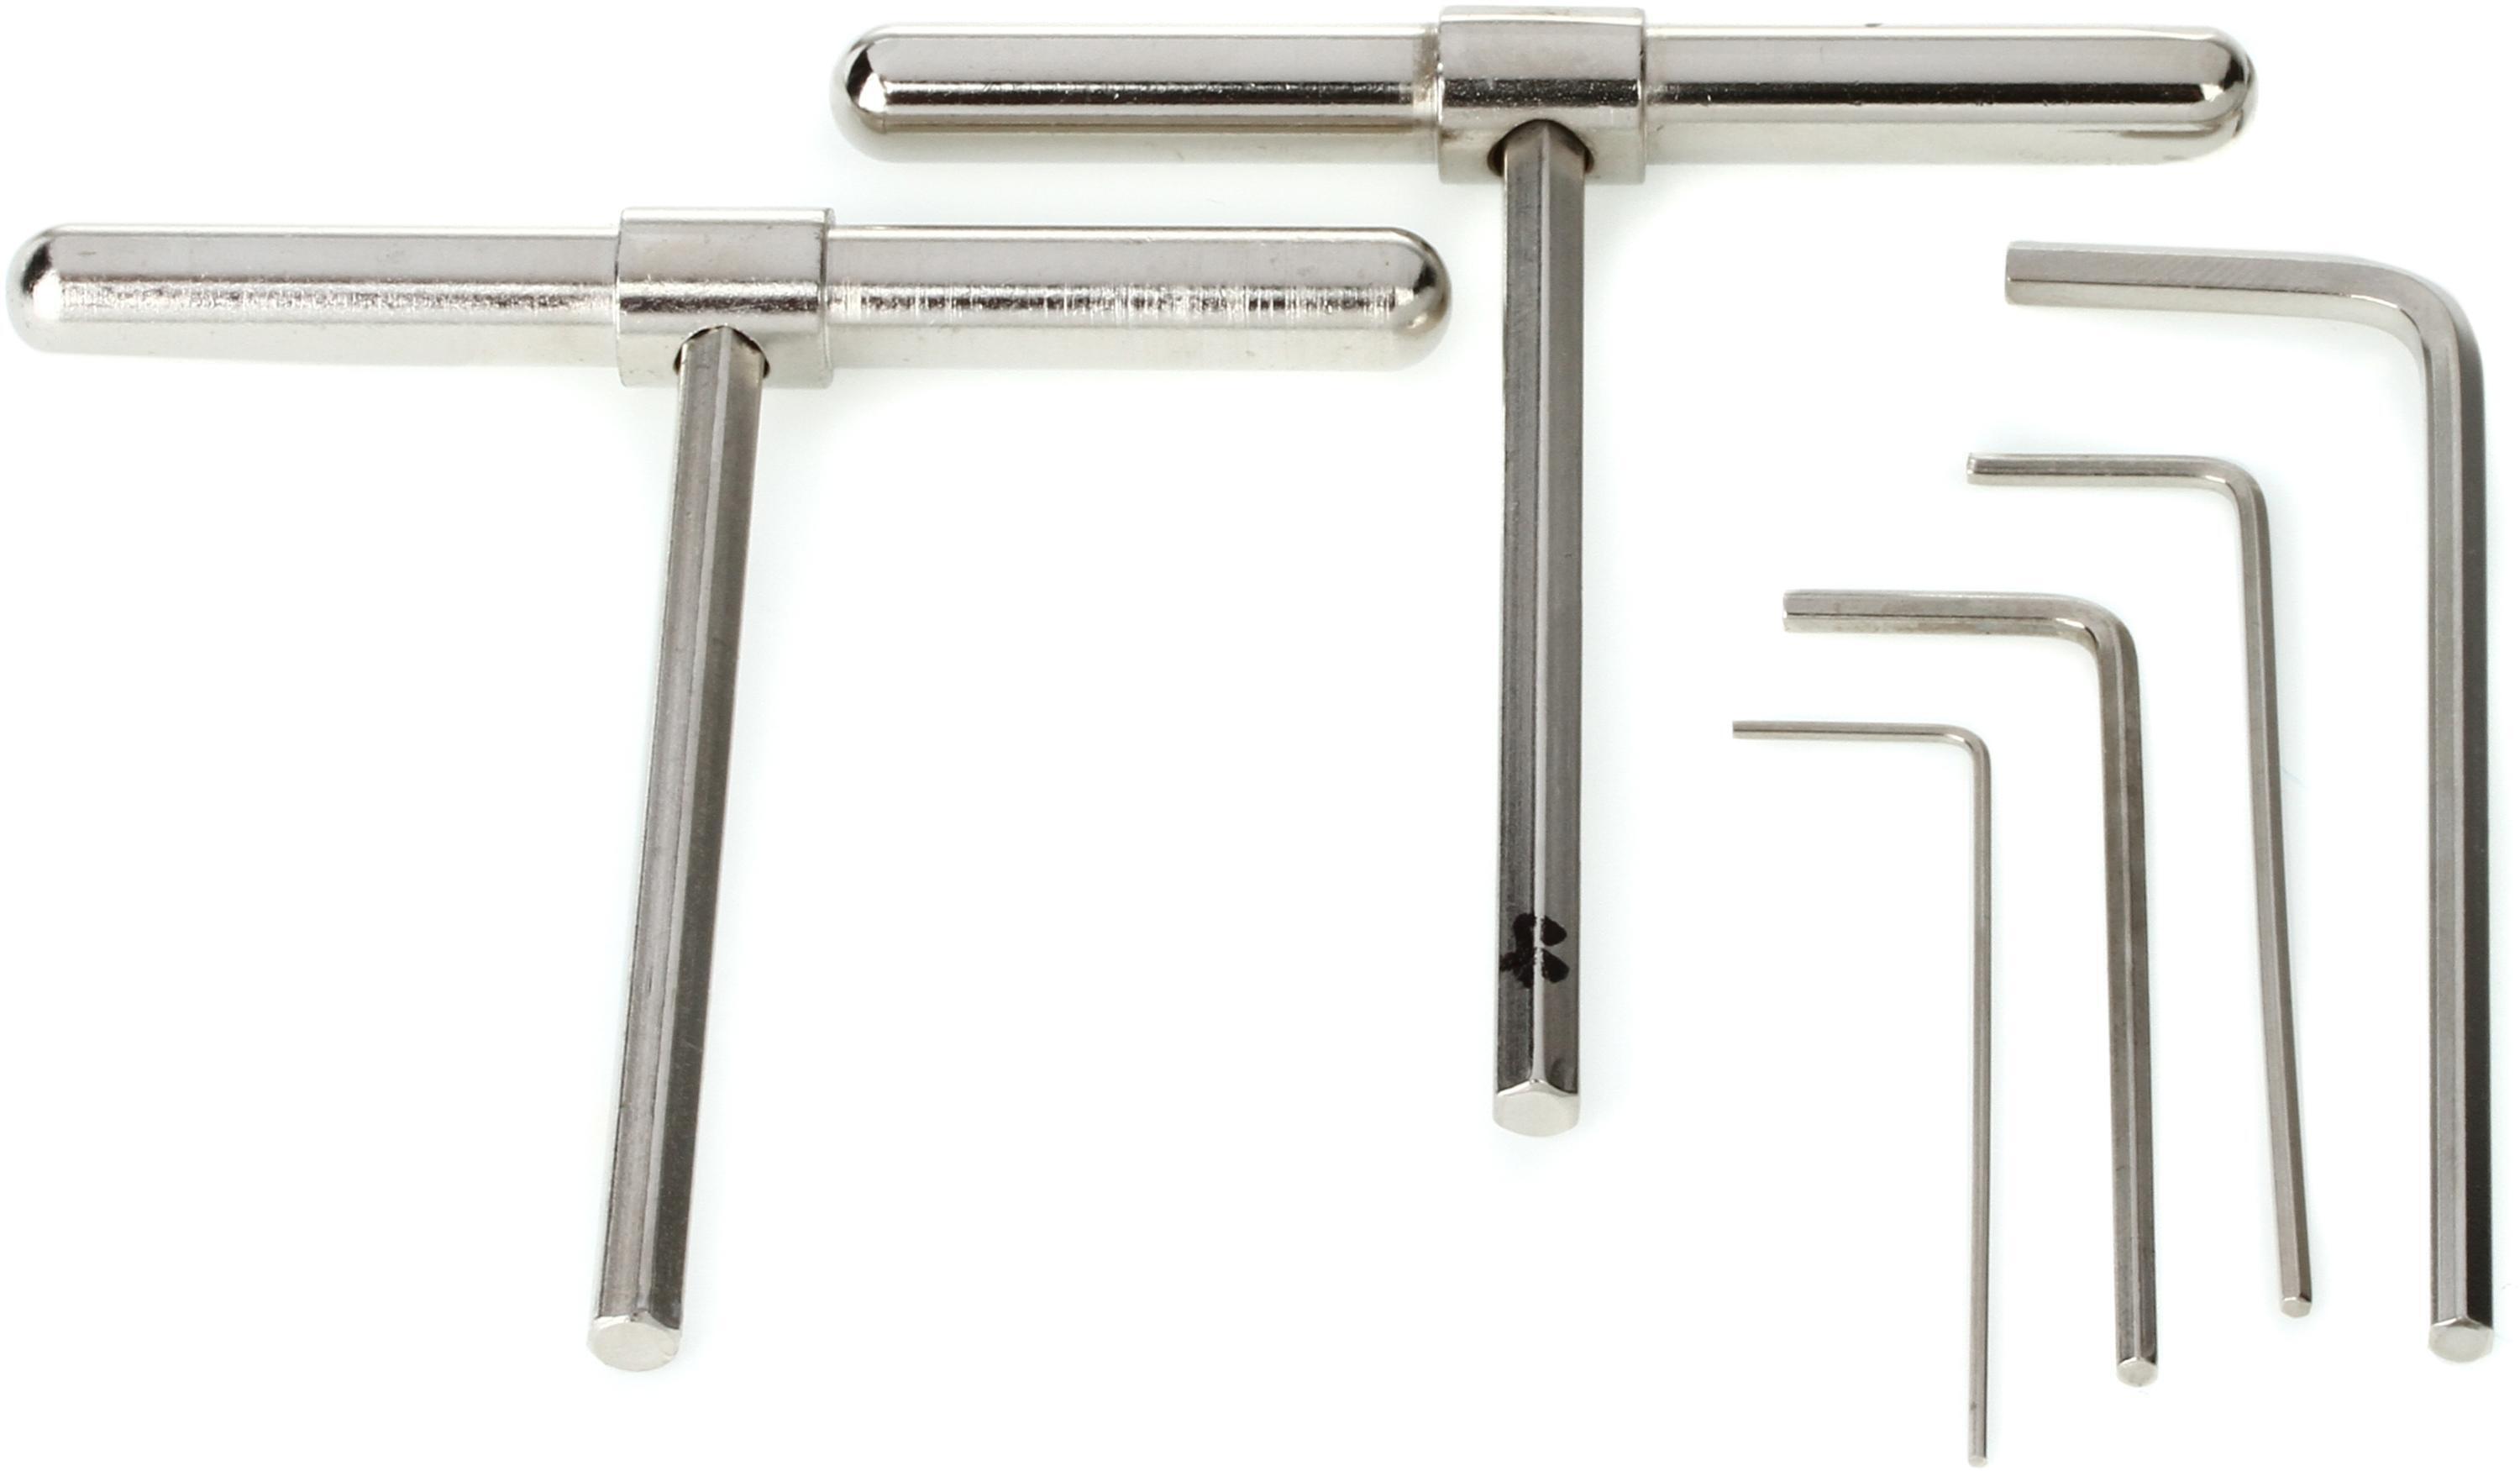 Strandberg Allen Key Kit for Bridge, Tunning, and Truss Rod Adjustments